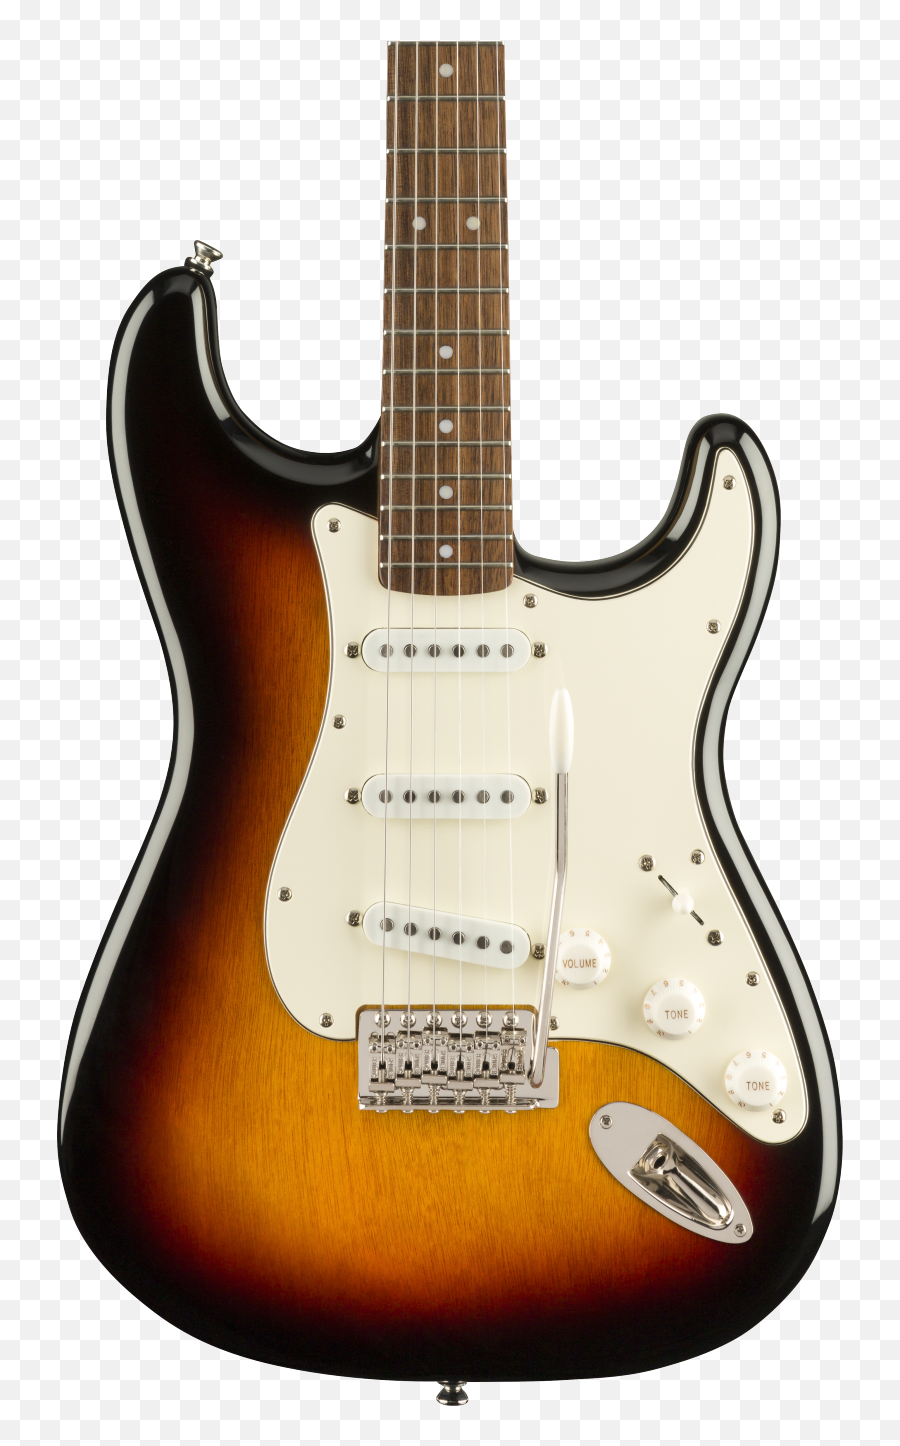 Httpswwwwoodsysmusiccom Daily Httpswww - Fender Player Stratocaster Sunburst Pau Ferro Png,Buffet Icon Barrel